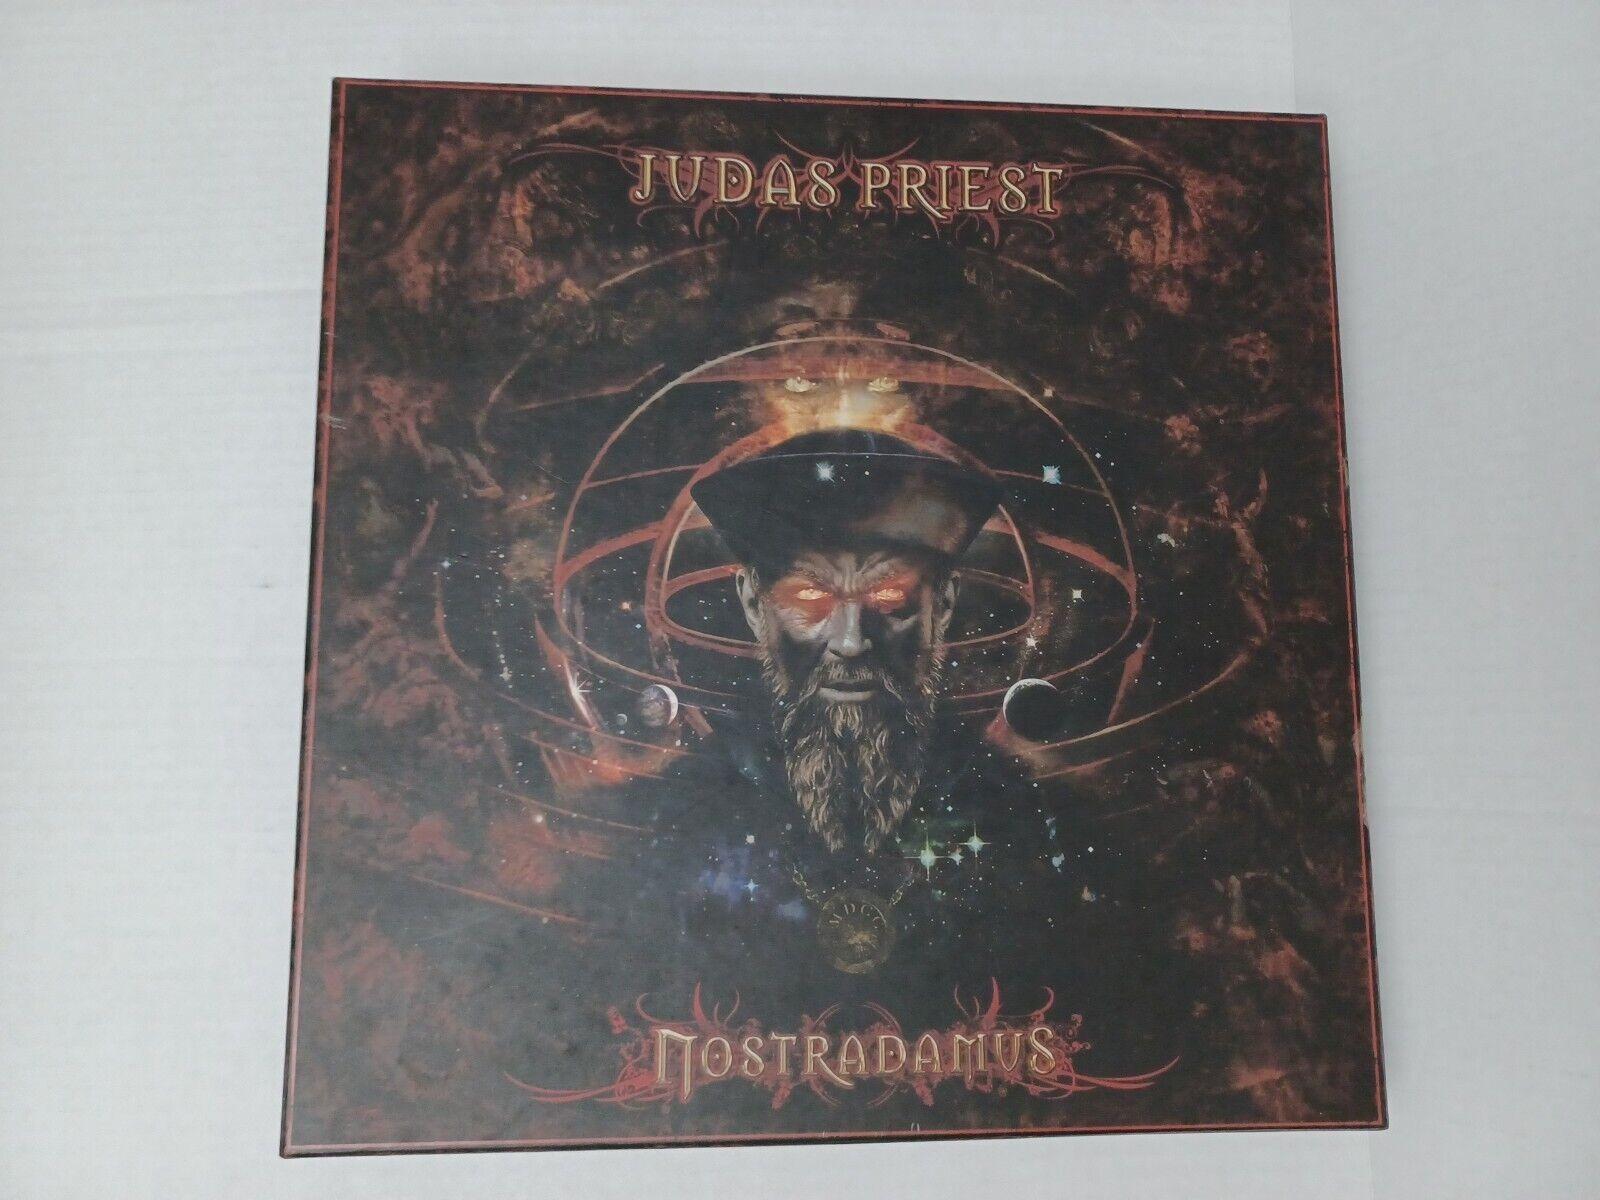 Judas Priest LP Nostradamus Box set 3LP 2cd | Aukro